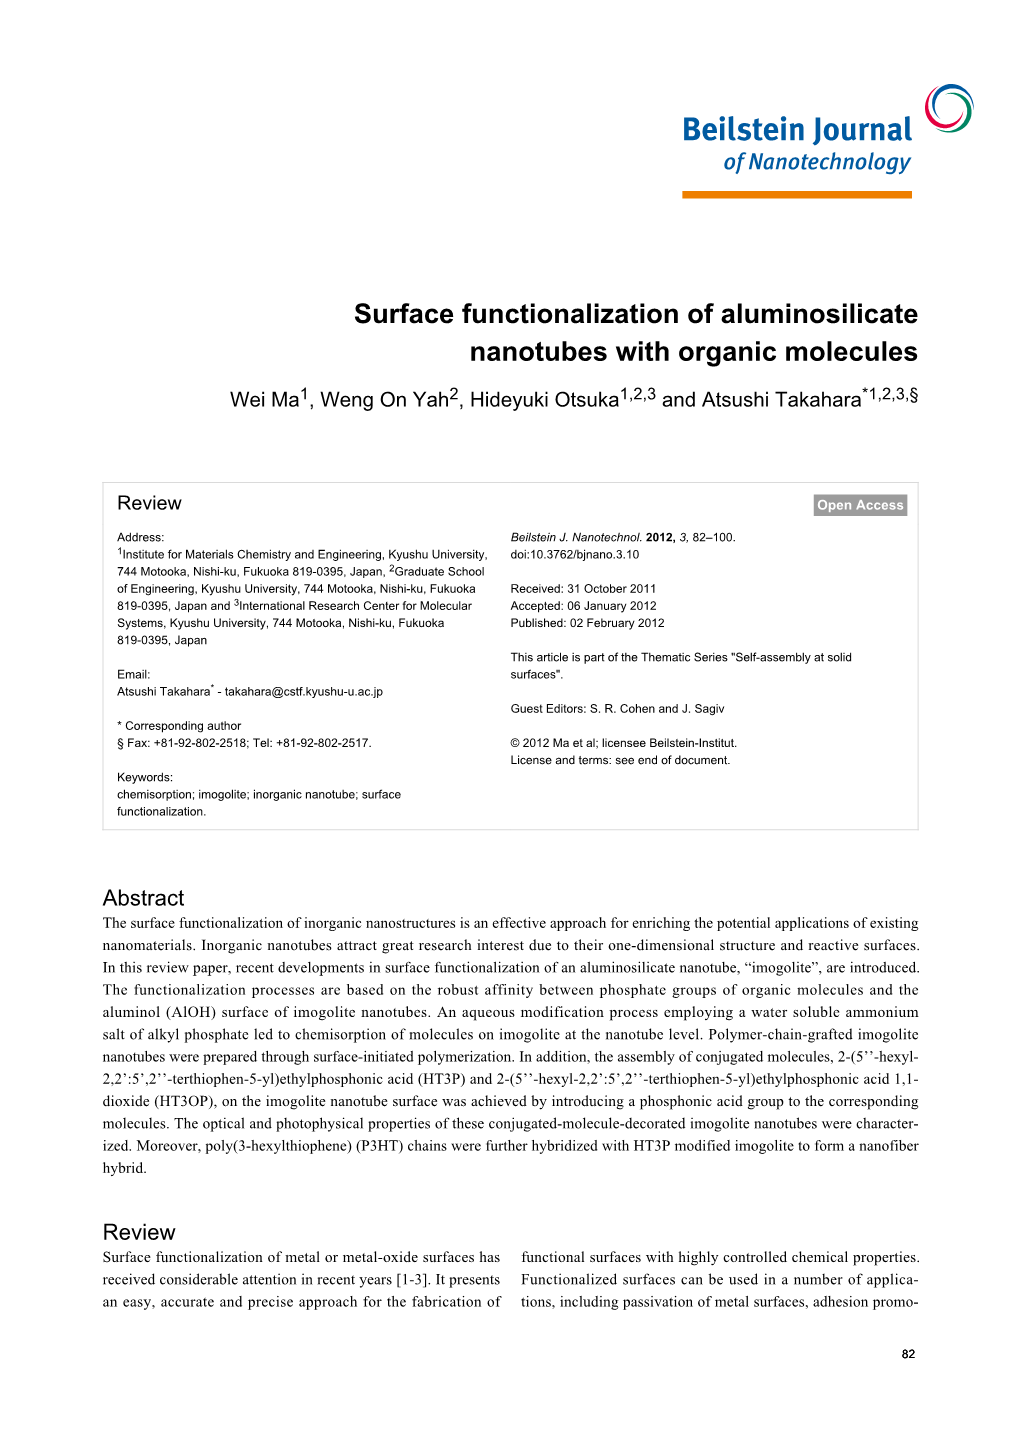 Surface Functionalization of Aluminosilicate Nanotubes with Organic Molecules